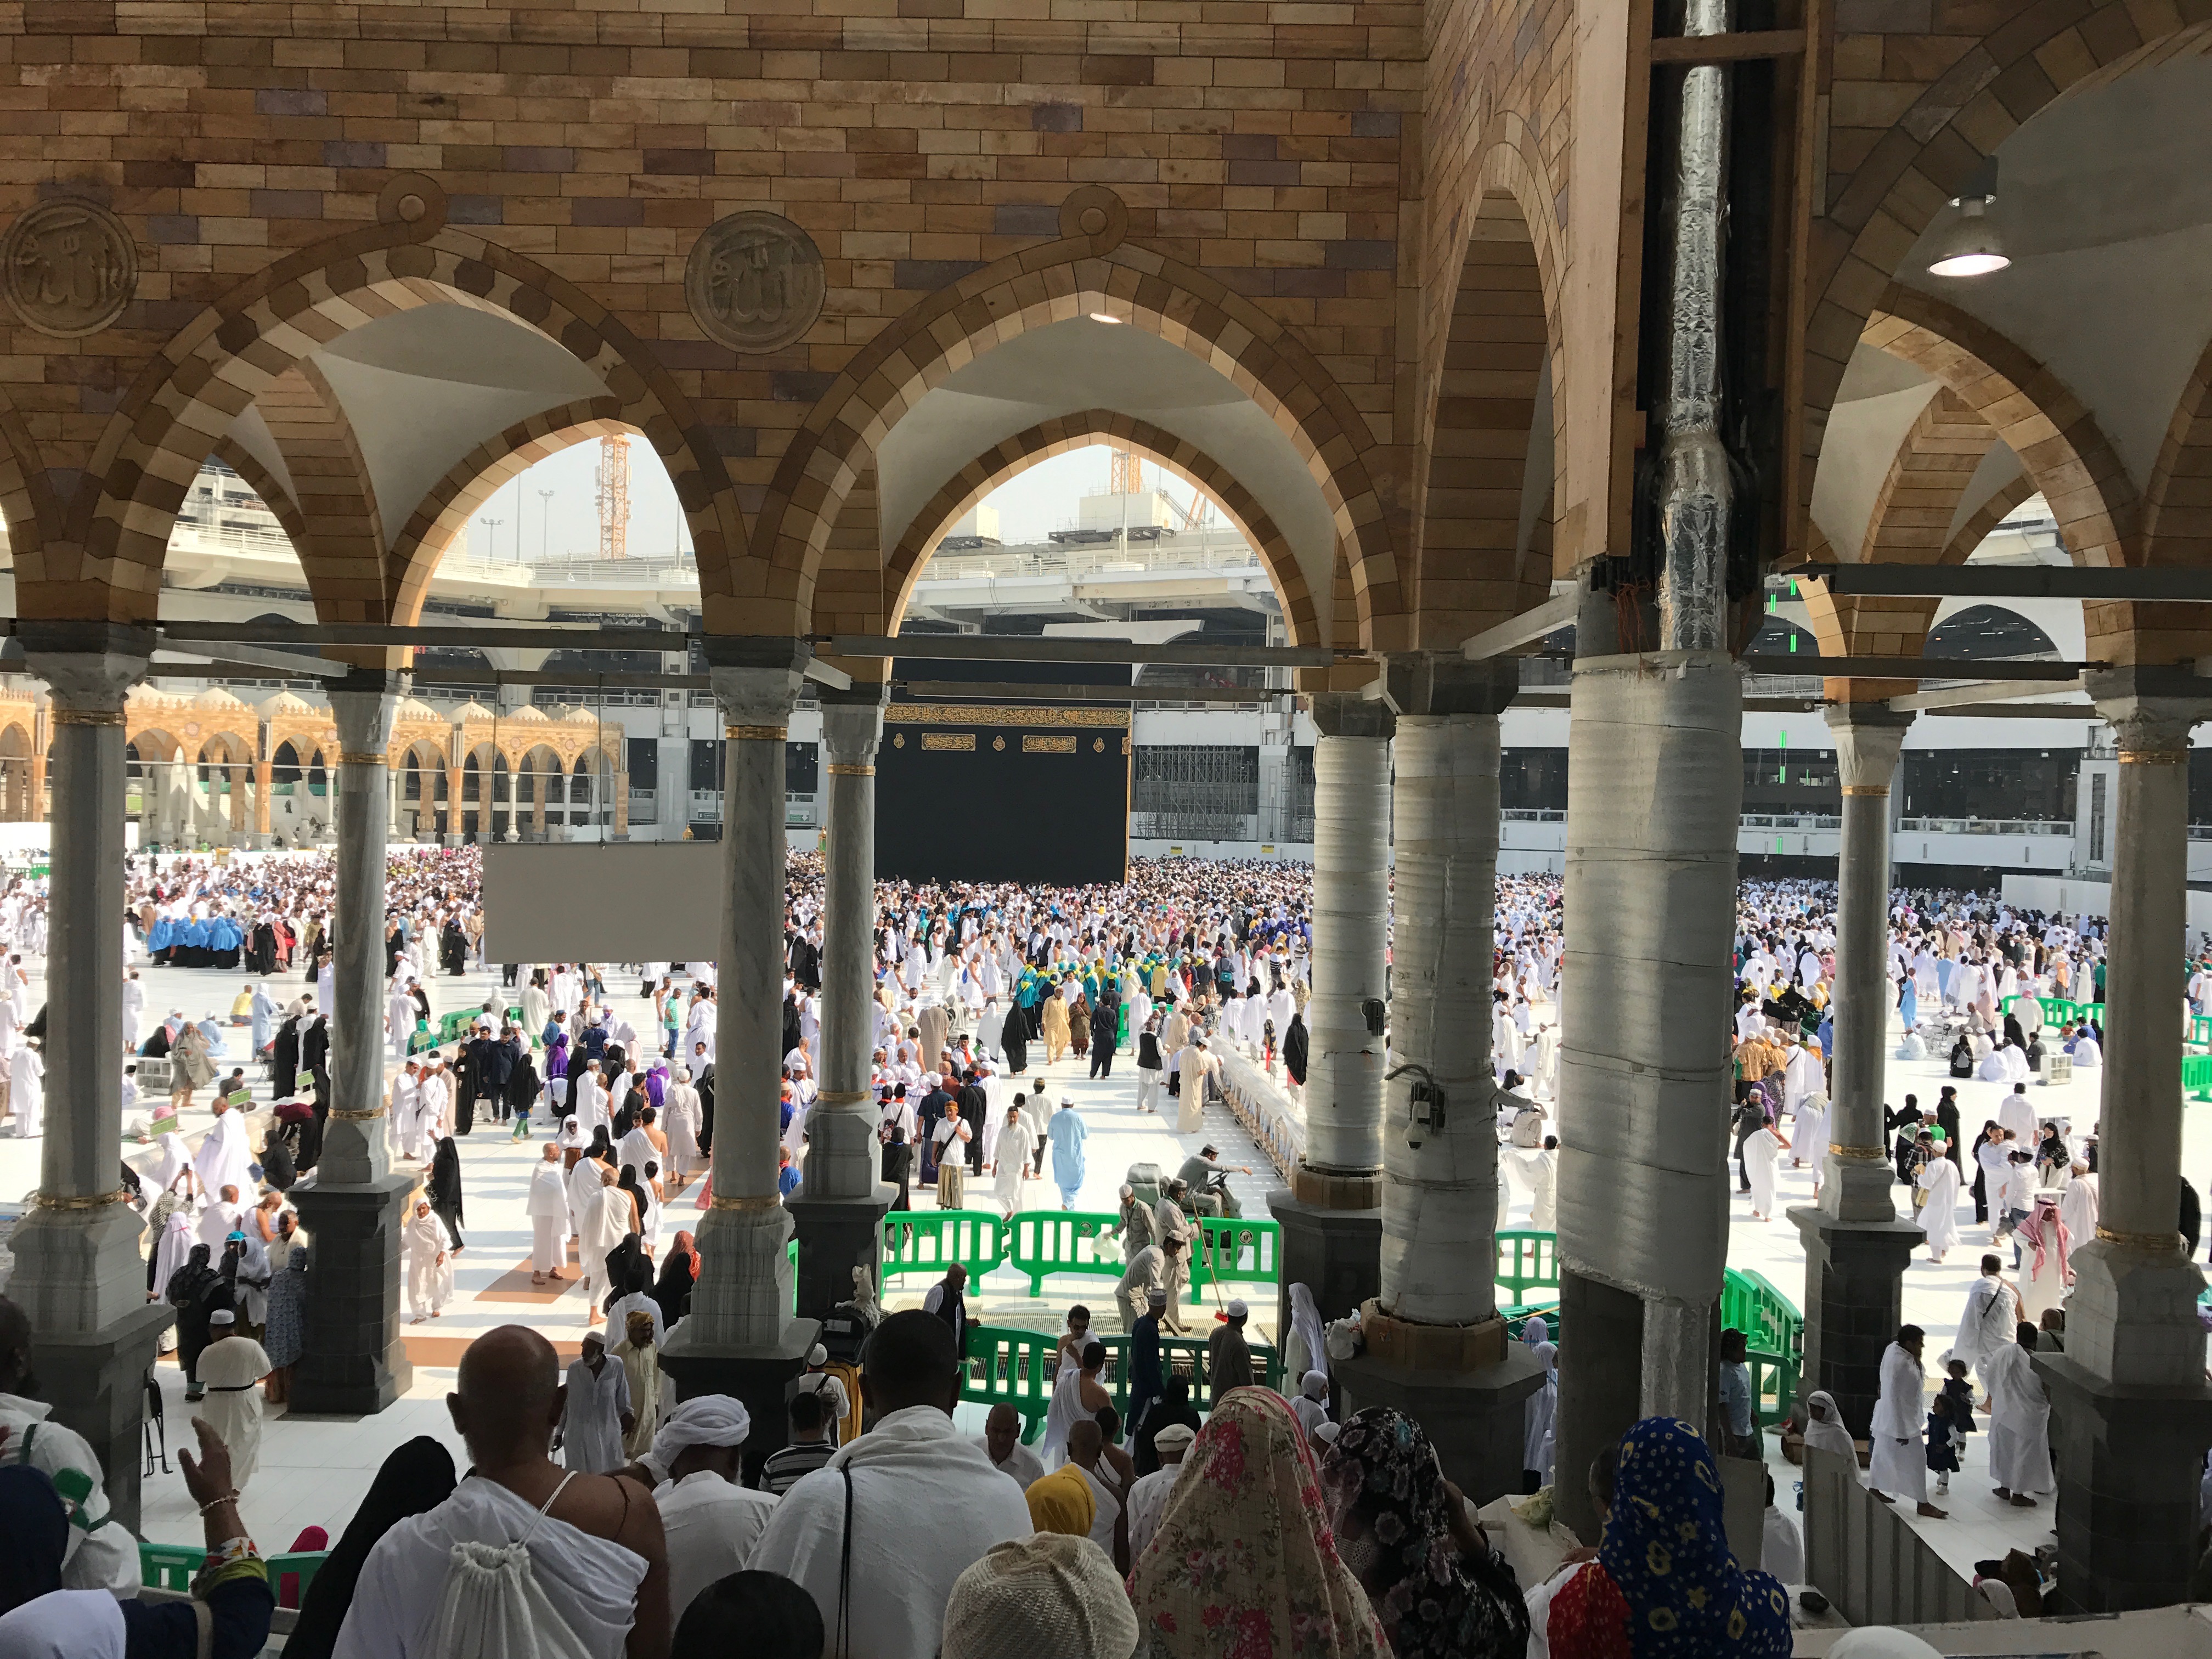 My Umrah experience: Inside Masjid Al Haram in Mecca